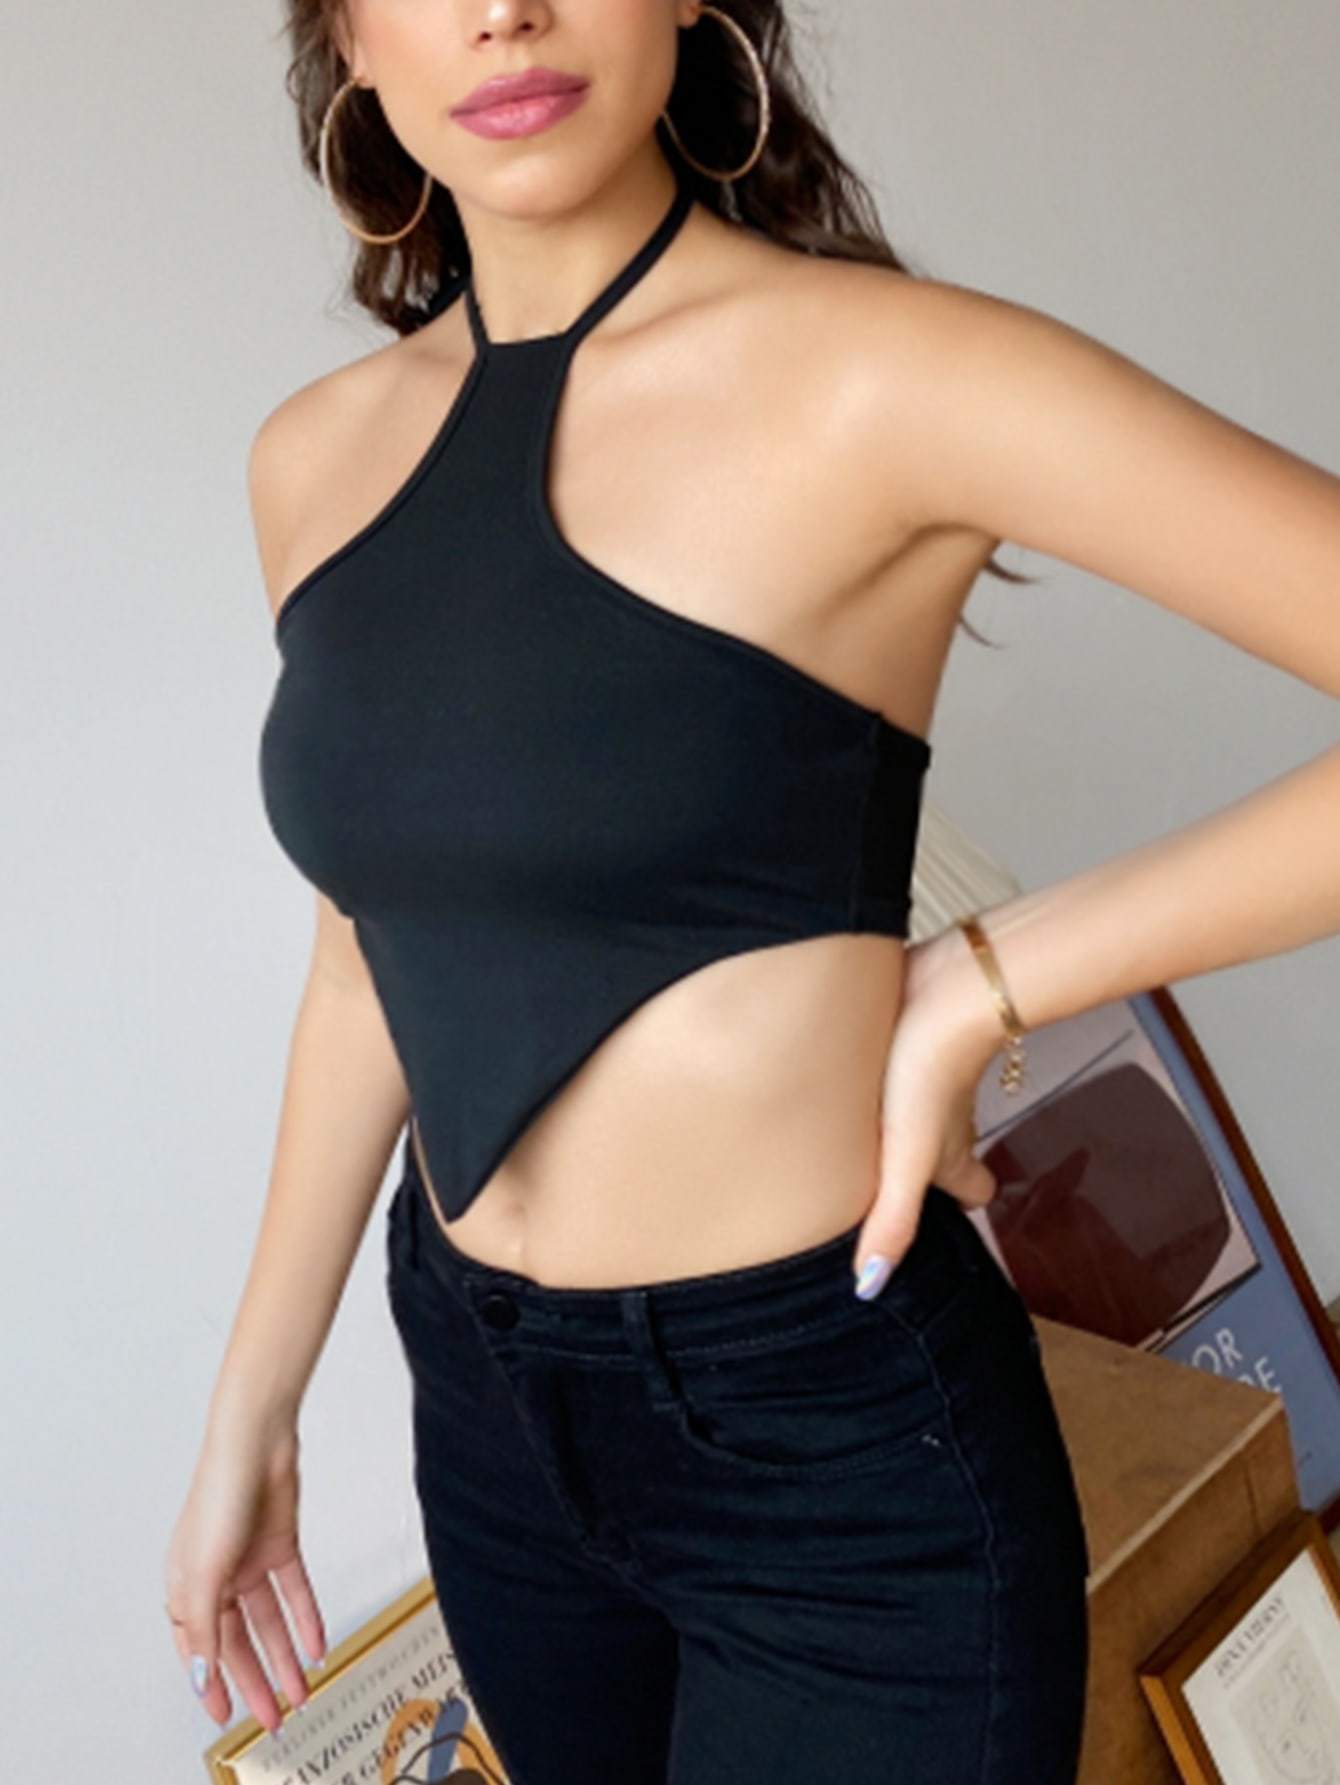 Black Sleeveless Backless Asymmetrical Hem Slim Fit Halter Top